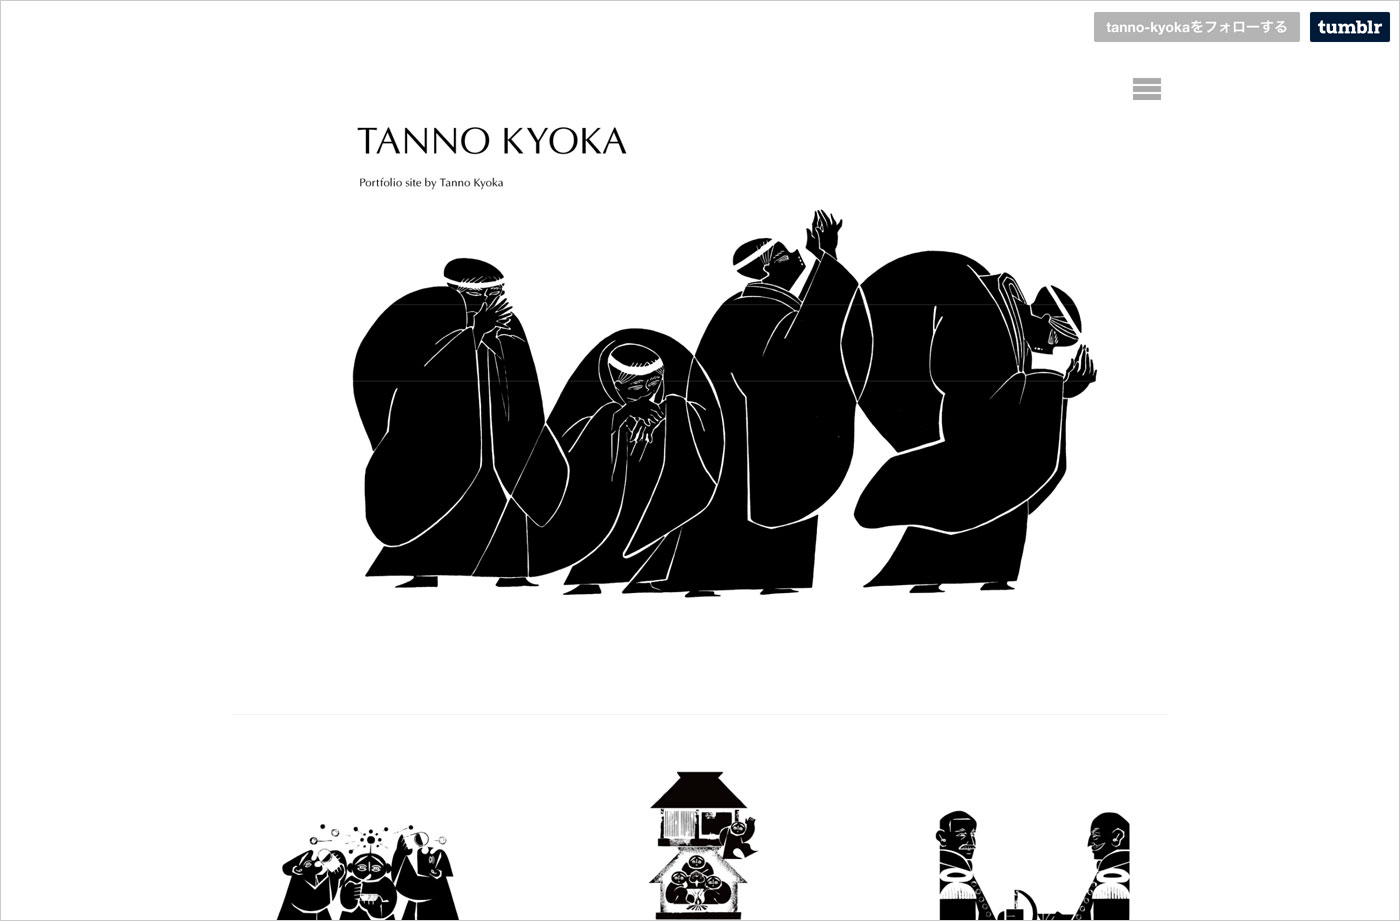 TANNO KYOKAウェブサイトの画面キャプチャ画像